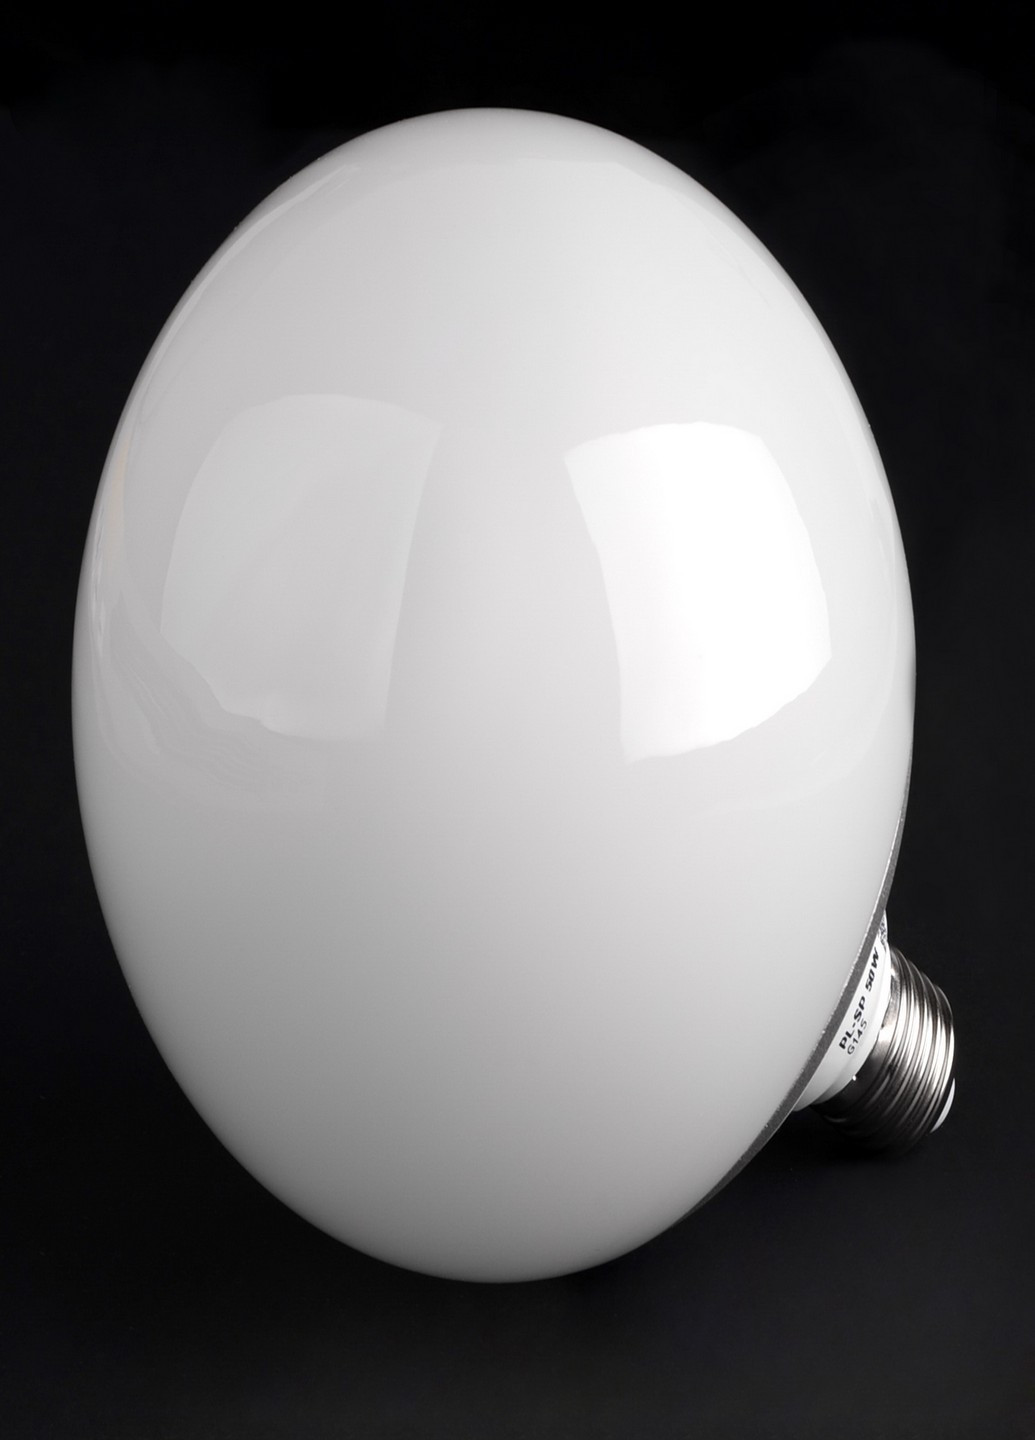 PL-SP 50W/864 E27 G145 лампа энергосберегающая Brille (185913954)